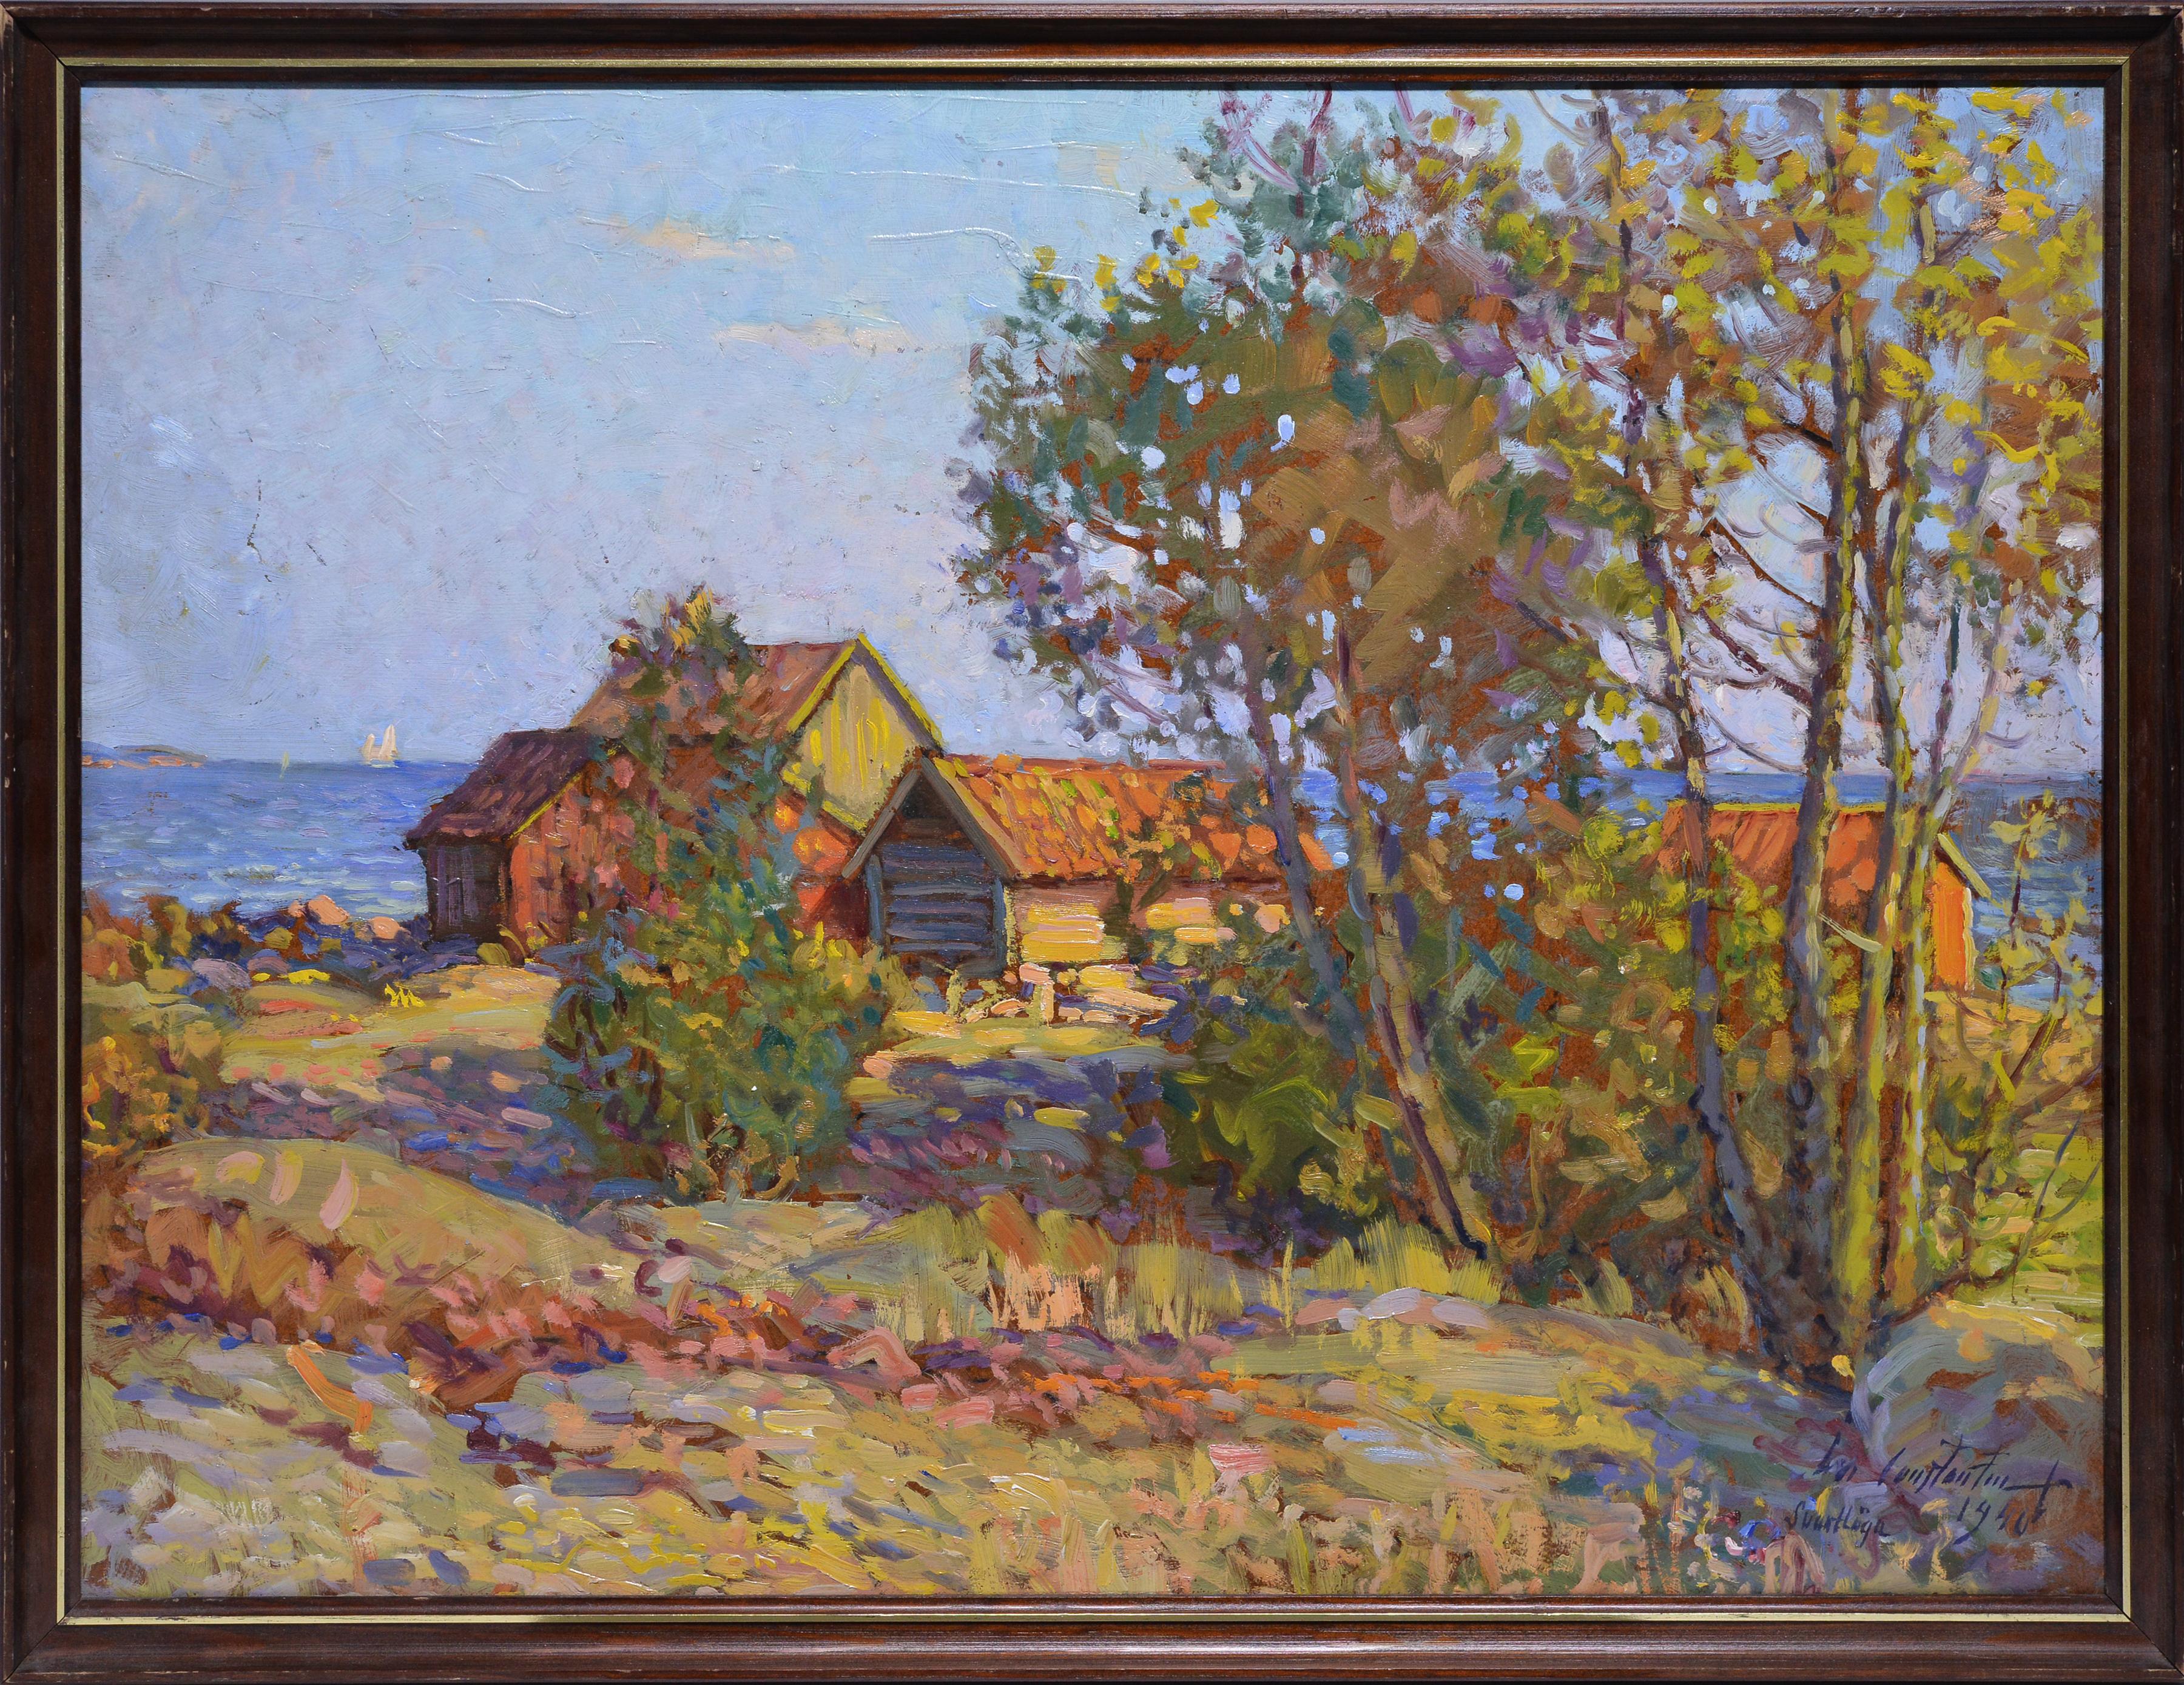 Ivan Constantin Sannesjö Johansson Landscape Painting - Stockholm Archipelago Landscape 1940 Oil Painting Renowned Impressionist Artist 